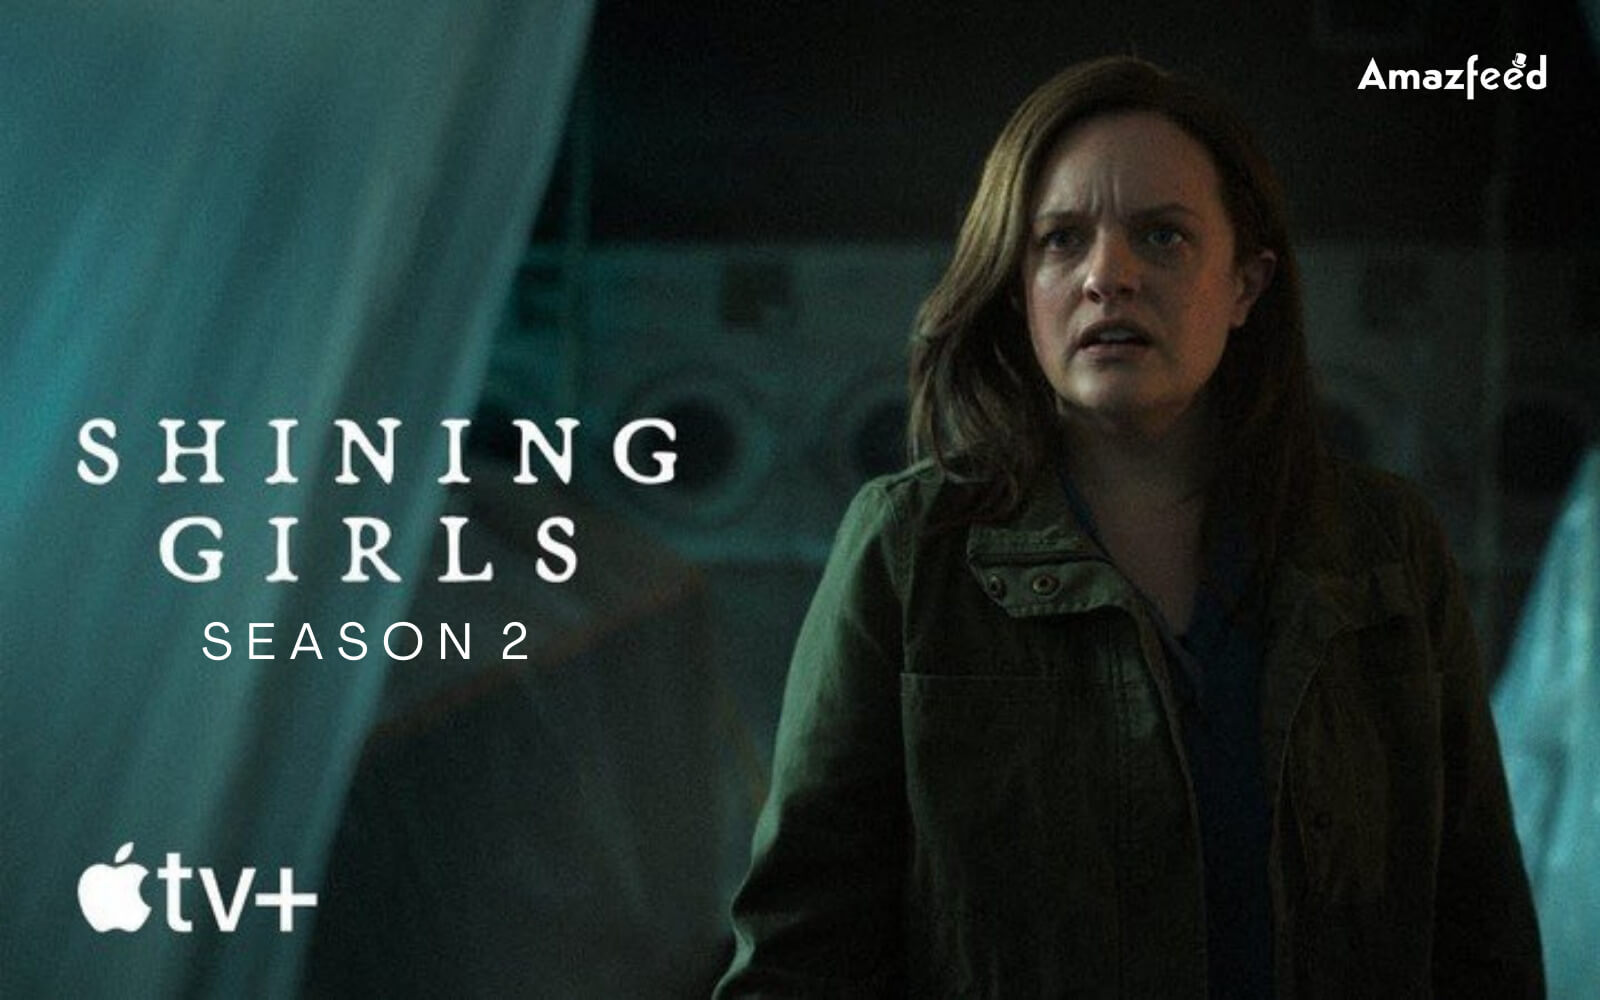 Shining Girls Season 2 release date